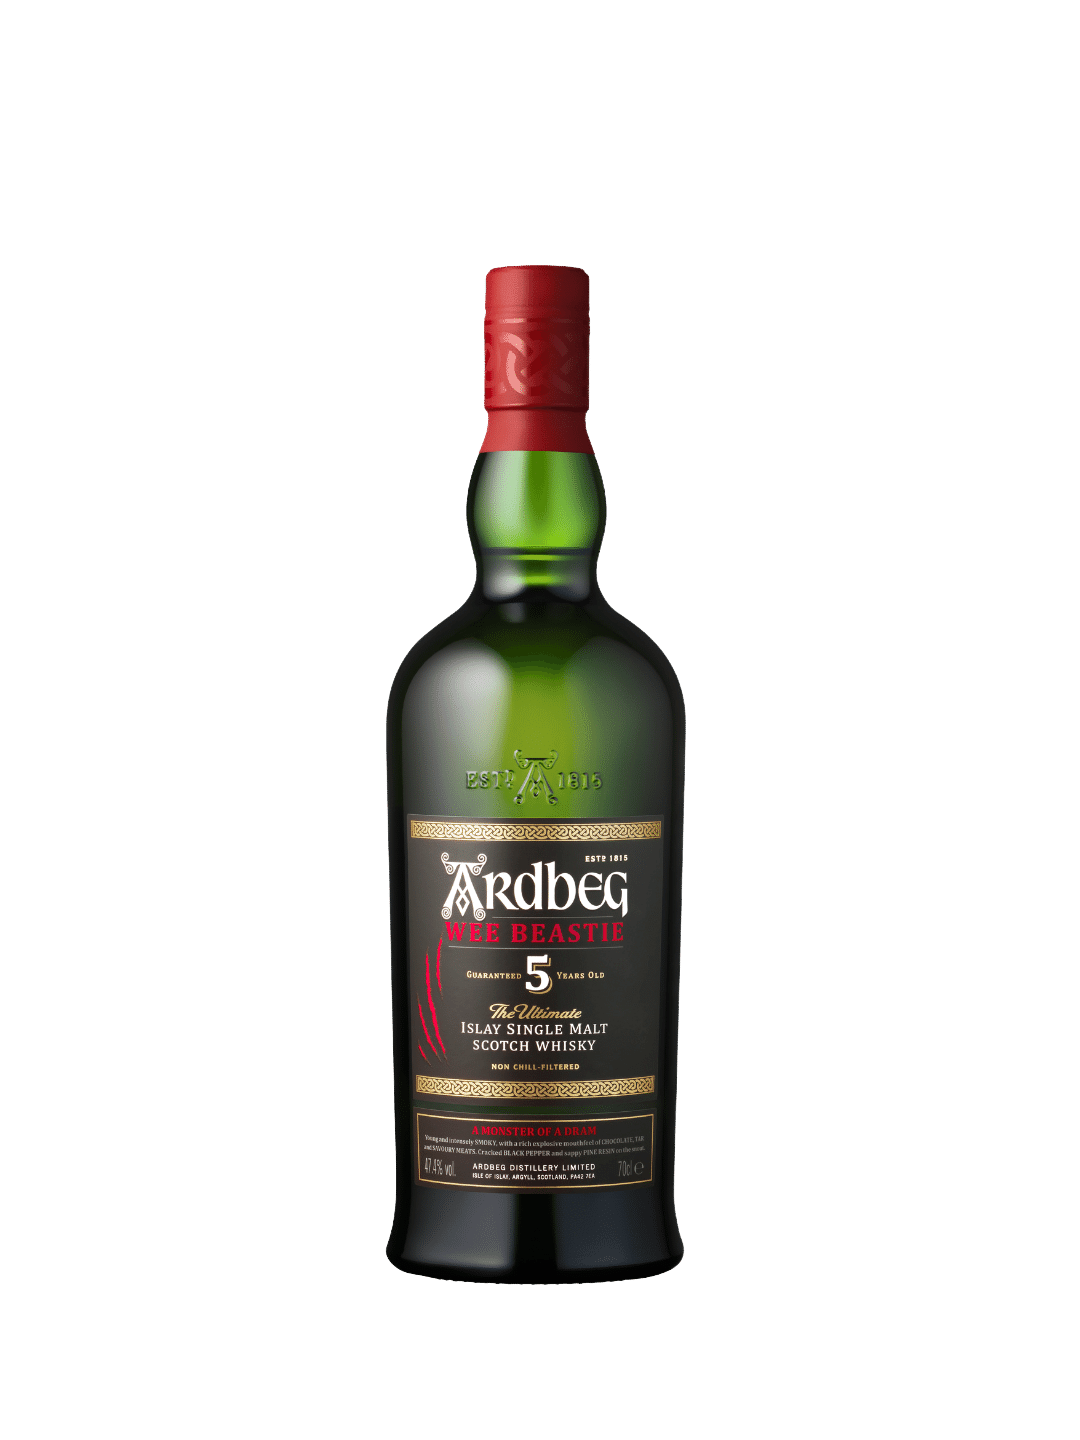 Ardbeg ‘Wee Beastie’ 5 Year Old Single Malt Scotch Whisky, Islay ...